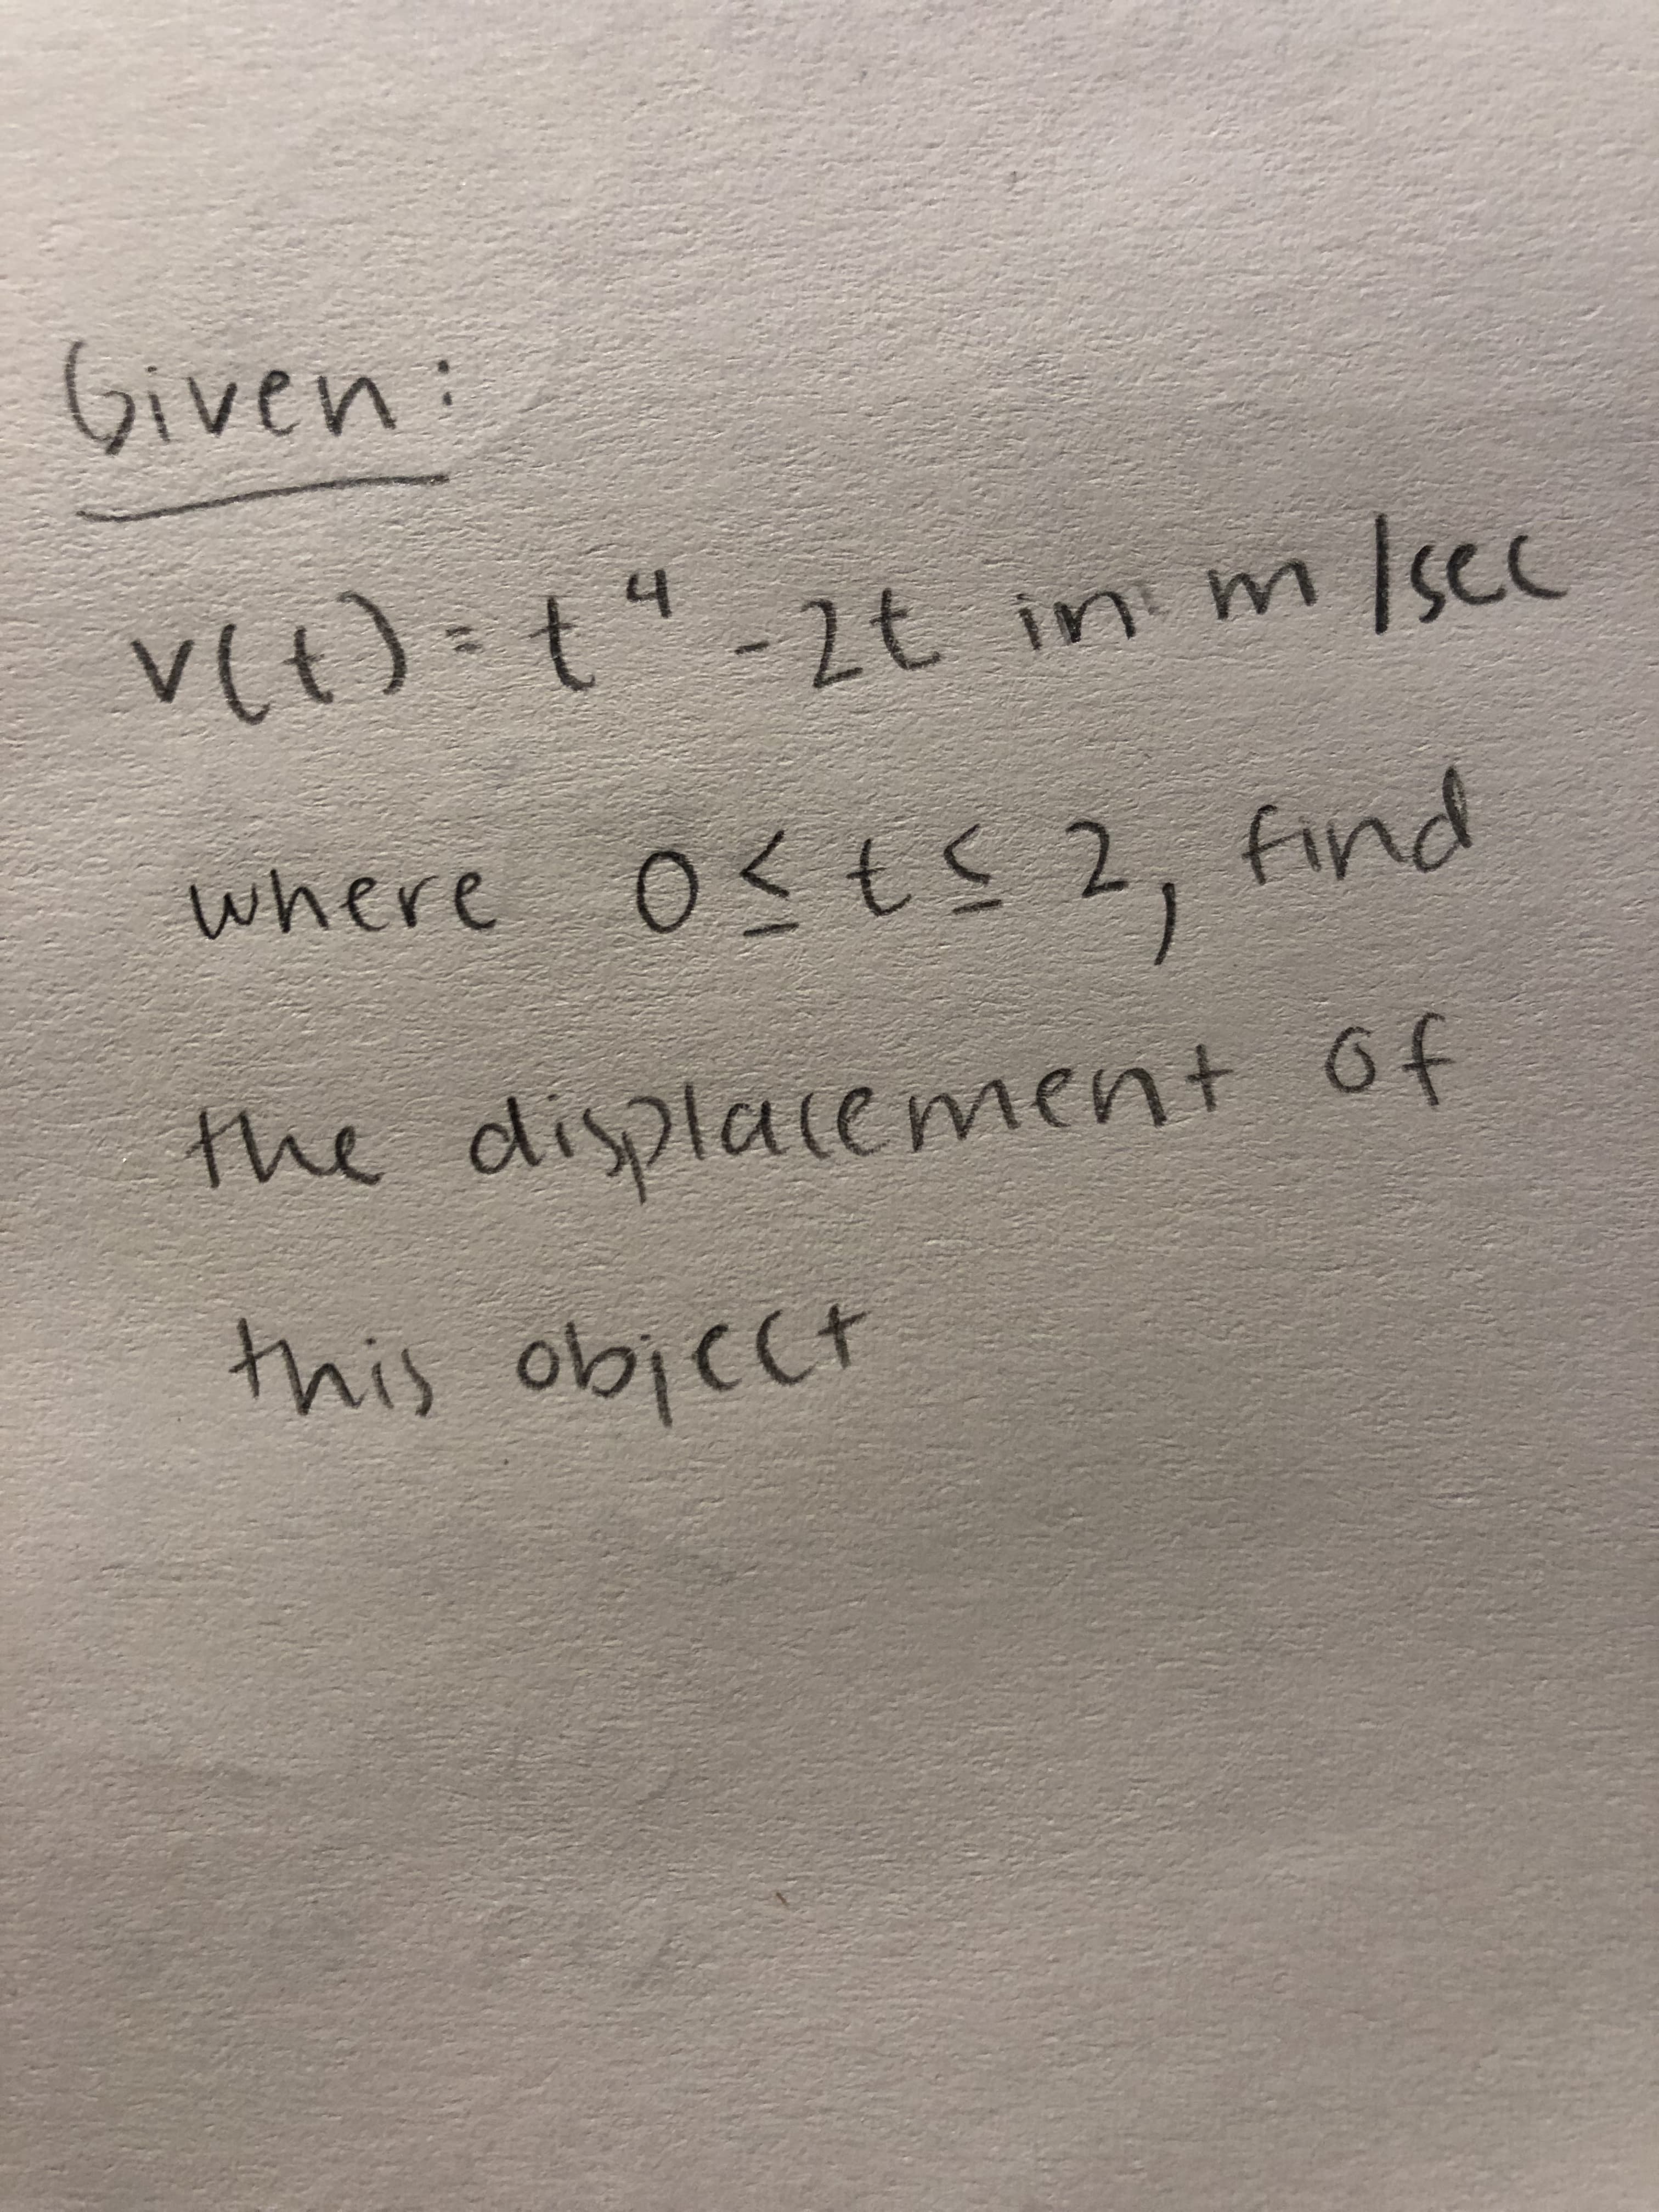 iven:
v(t)=t"-2t in m
Iscc
where os ts
find
the displacement of
this objcct
